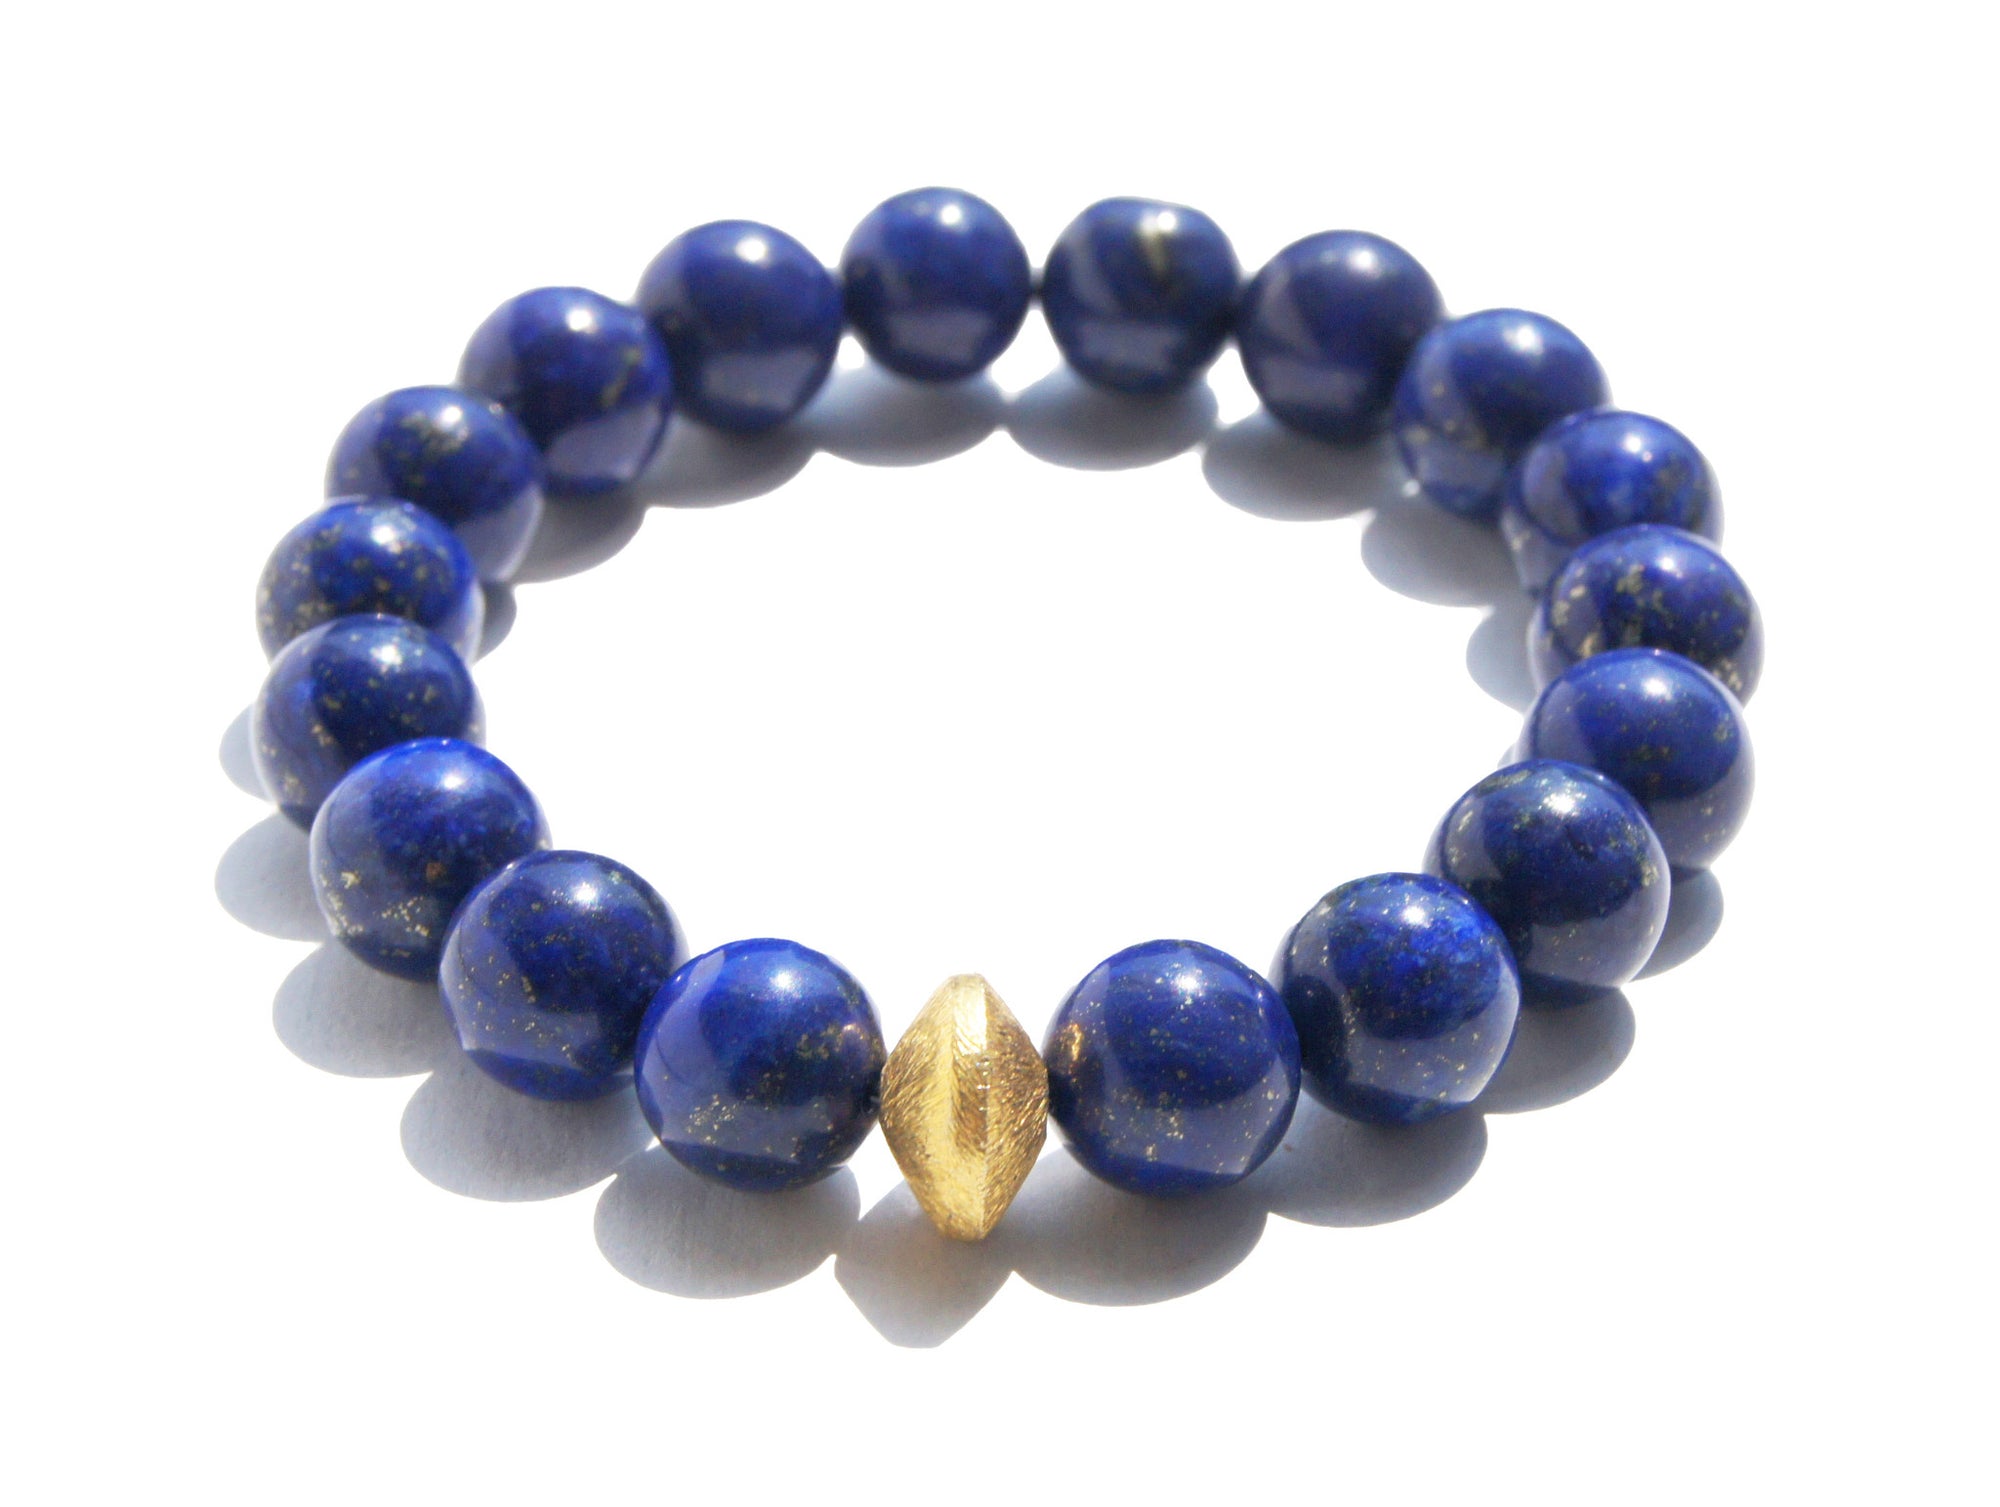 Blue Lapis Wisdom Bracelet With Gold Disc